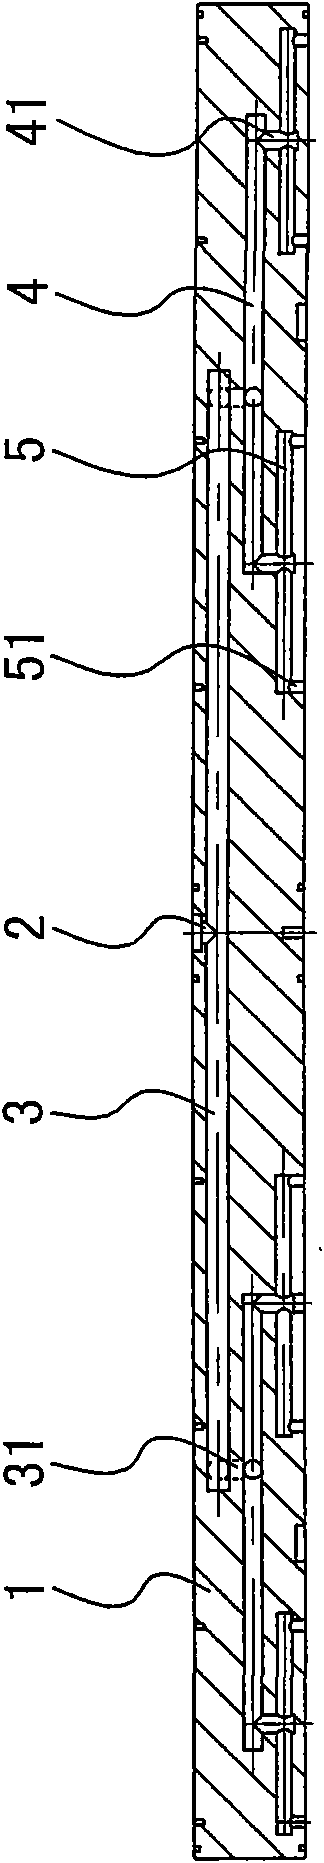 Three-layer divided-flow hot runner rack